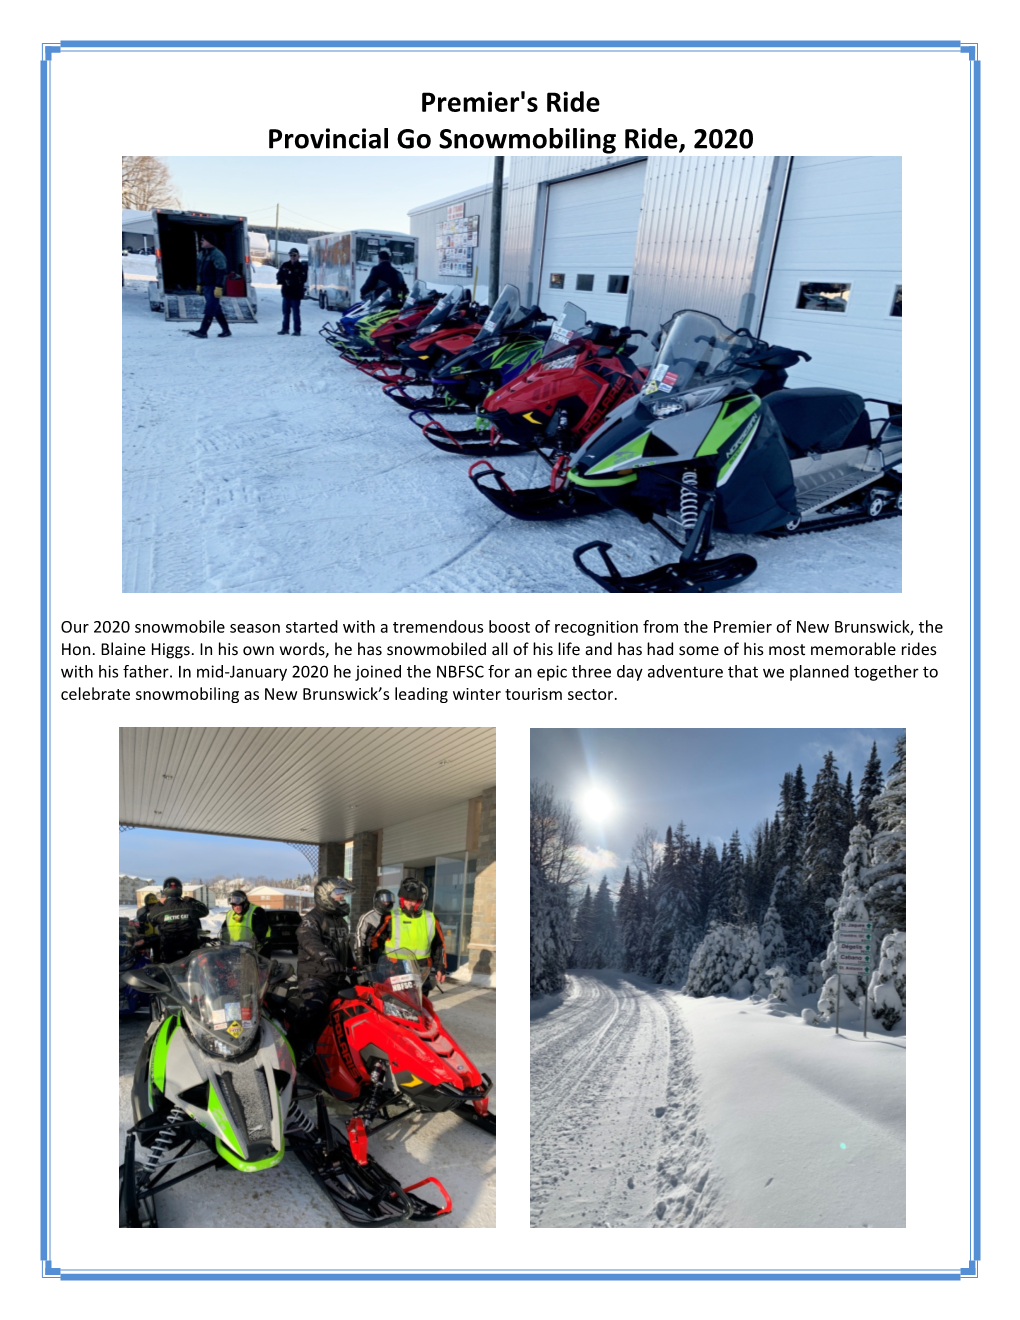 Premier's Ride Provincial Go Snowmobiling Ride, 2020